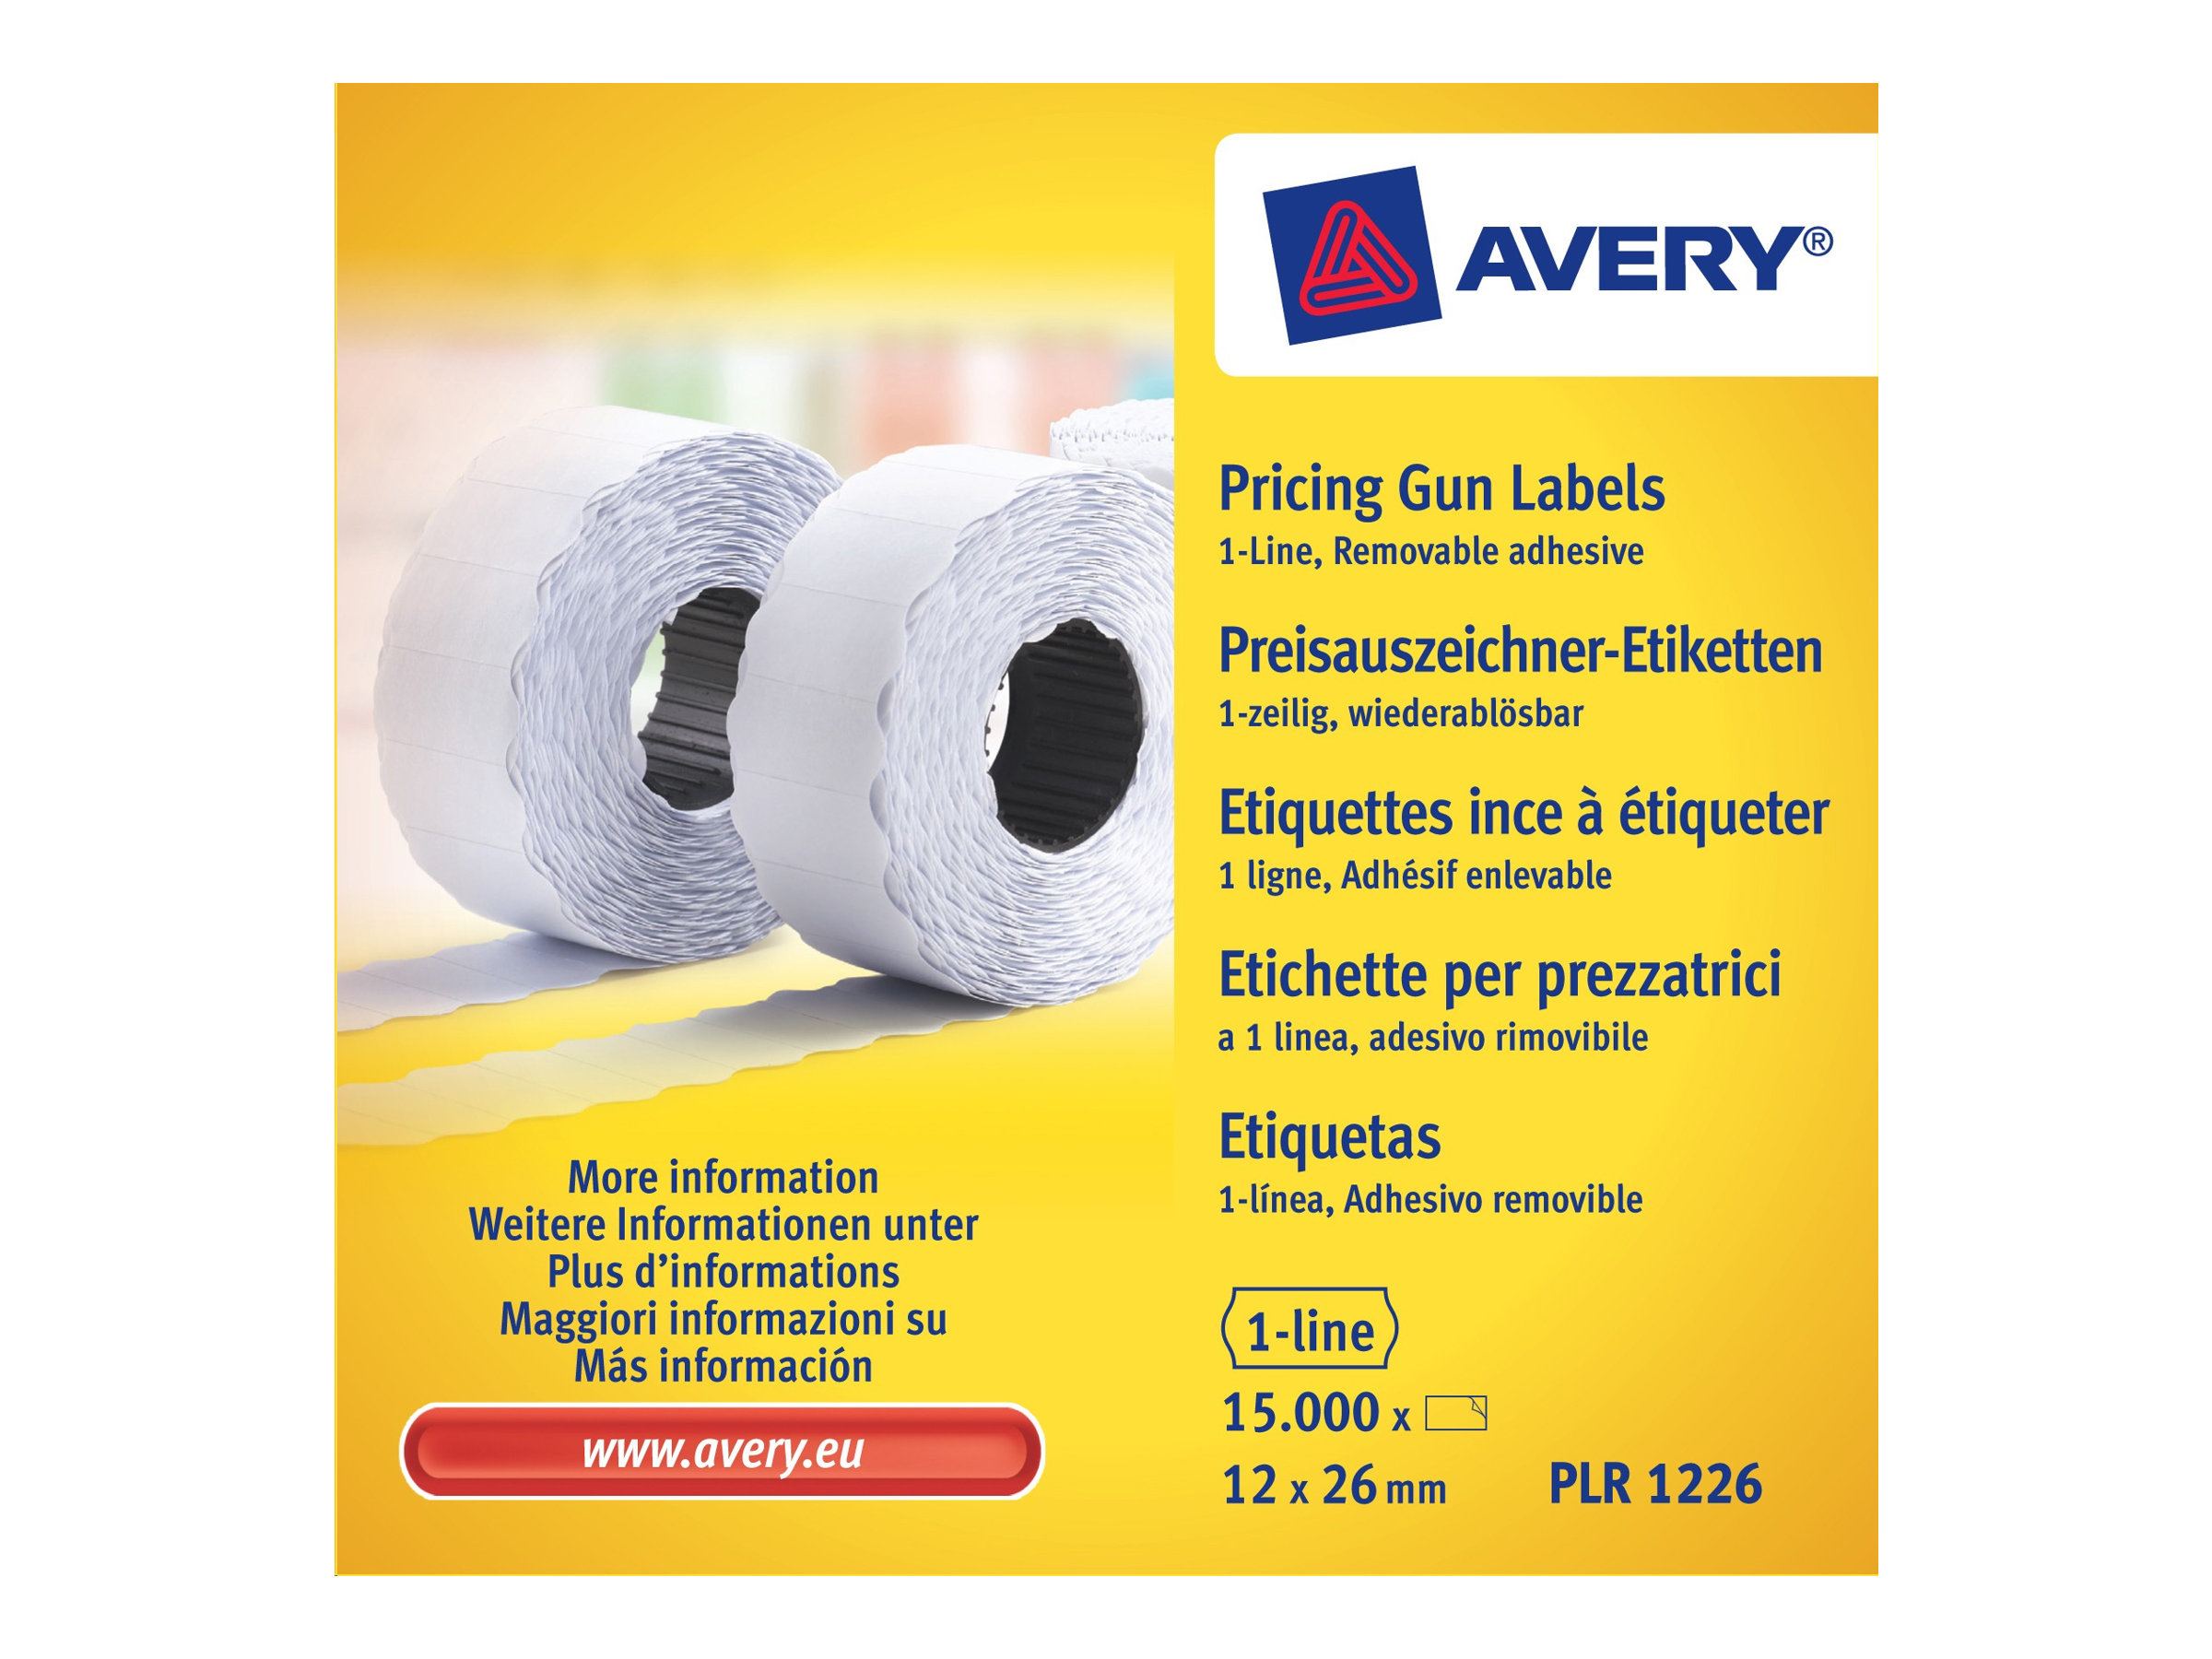 Avery Zweckform - Papier - entfernbarer Klebstoff - weiss - 12 x 26 mm 15000 Etikett(en) (10 Rolle(n) x 1500) Preisschildetikett